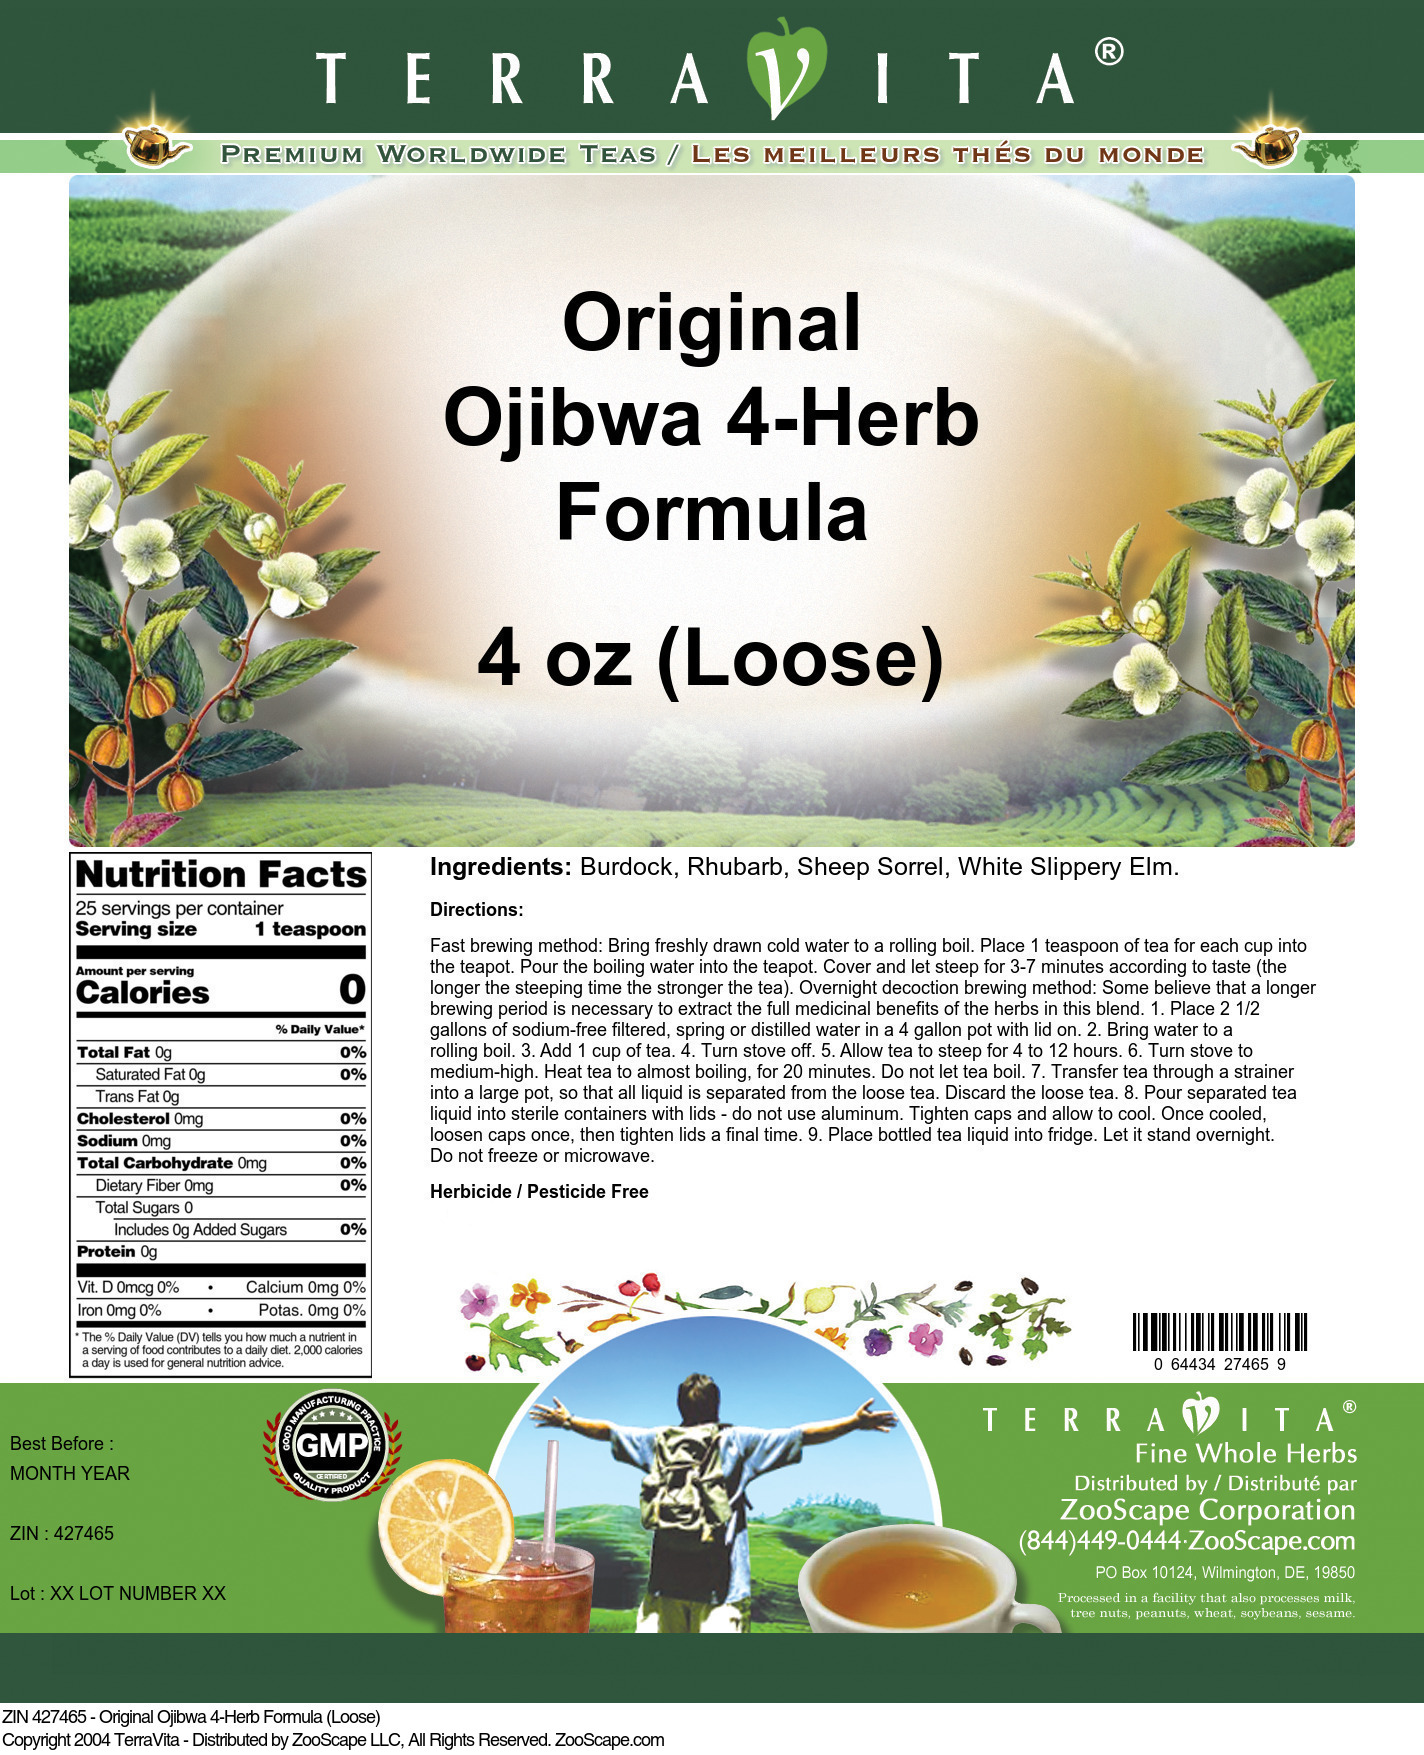 Original Ojibwa 4-Herb Formula (Loose) - Label